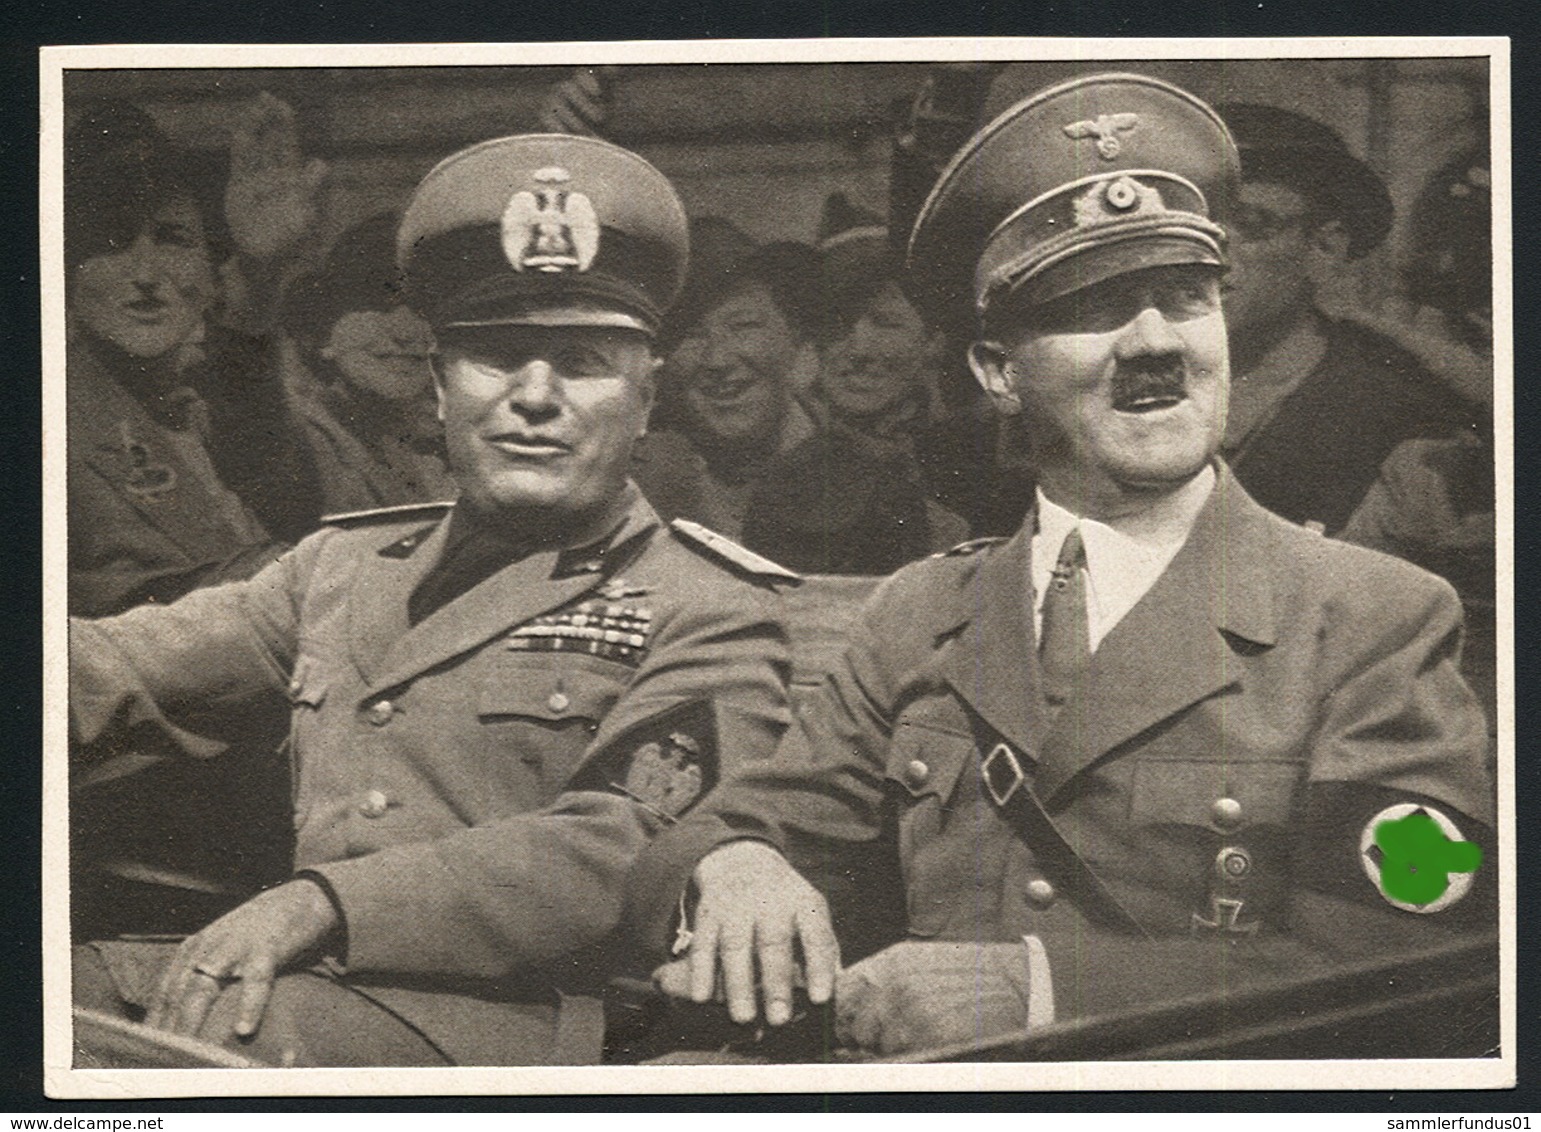 AK/CP Hitler Mussolini  Duce  Propaganda  Nazi  Ungel/uncirc. 1941    Erhaltung/Cond. 2-  Nr. 00573 - Guerra 1939-45